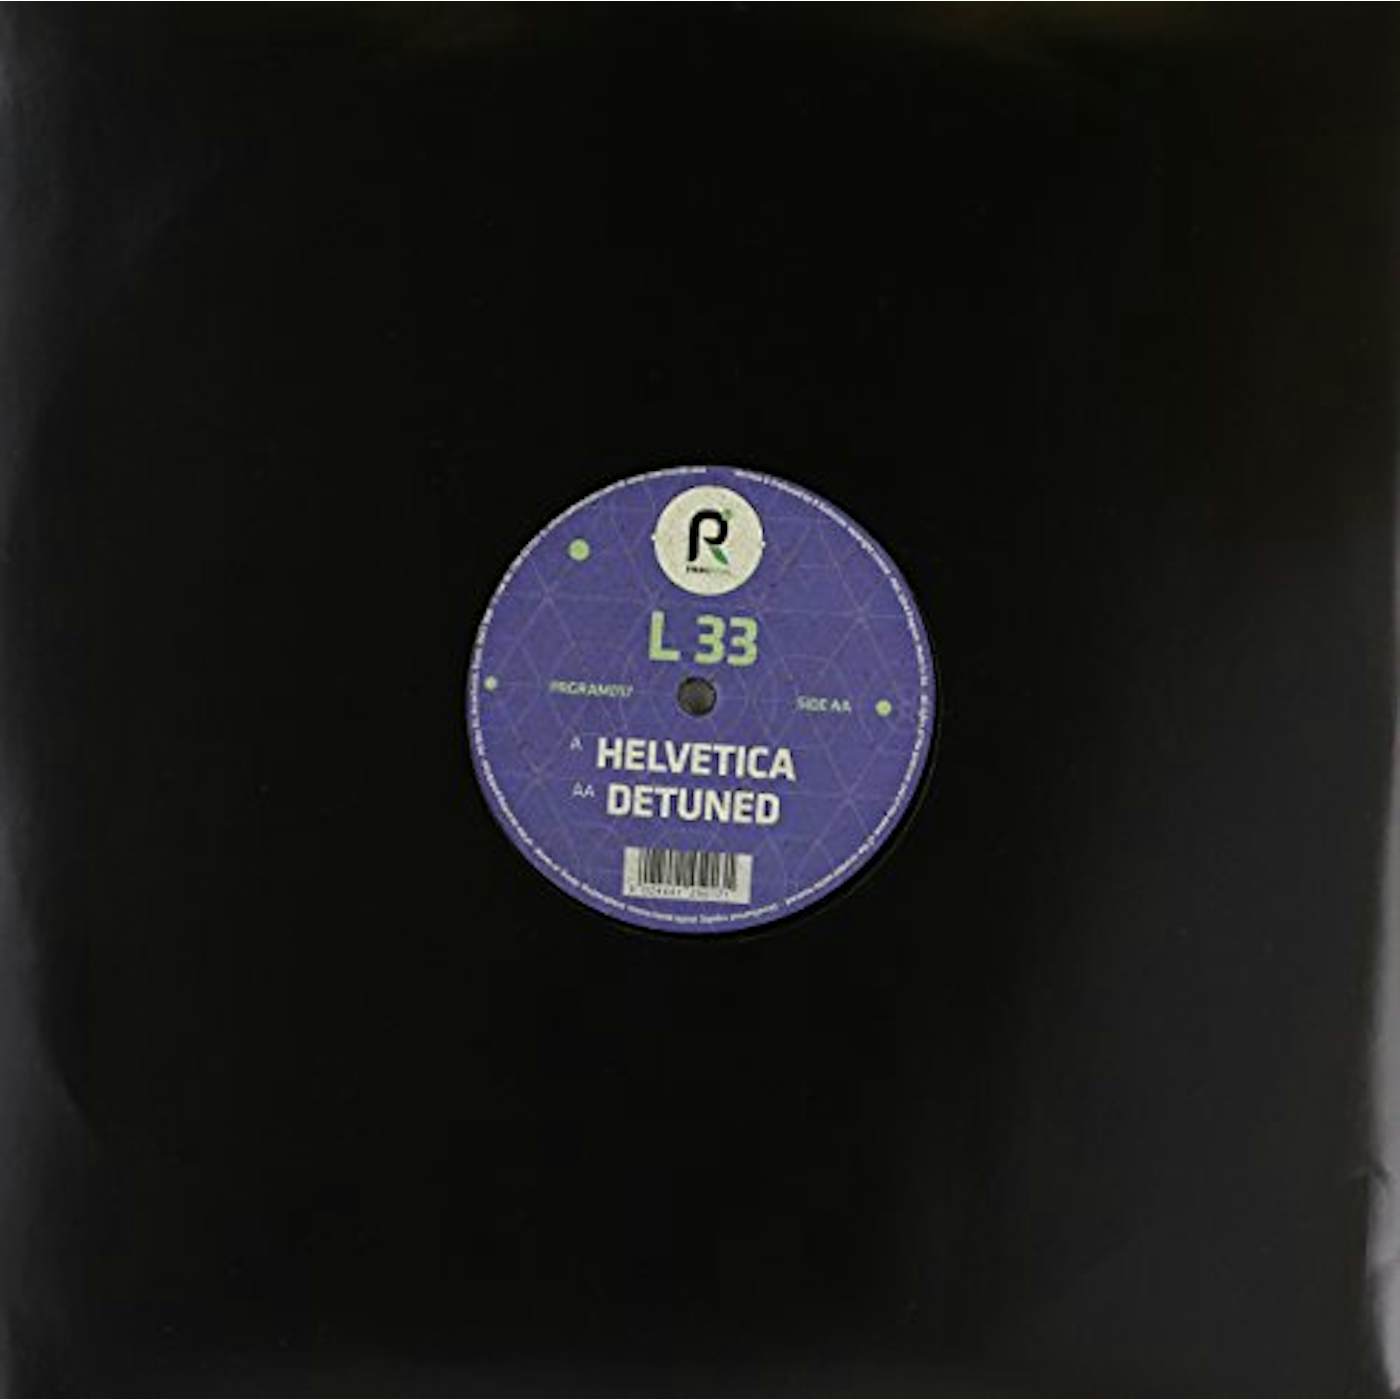 L 33 HELVETICA/DETUNED Vinyl Record